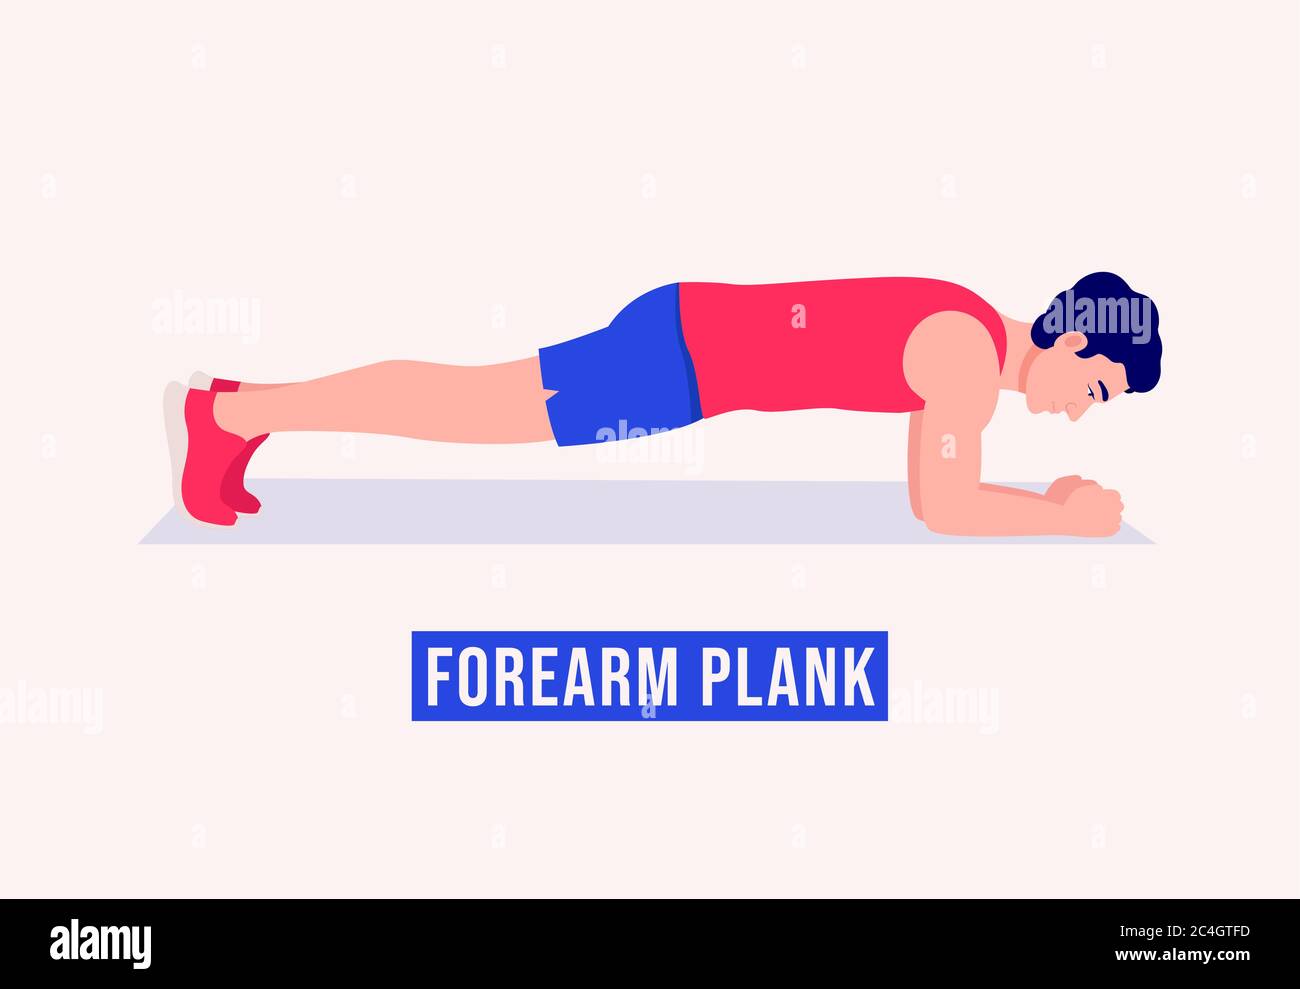 Männer tun Unterarm Plank Übung, Männer Fitness-Training, Aerobic und Übungen. Vektorgrafik. Stock Vektor